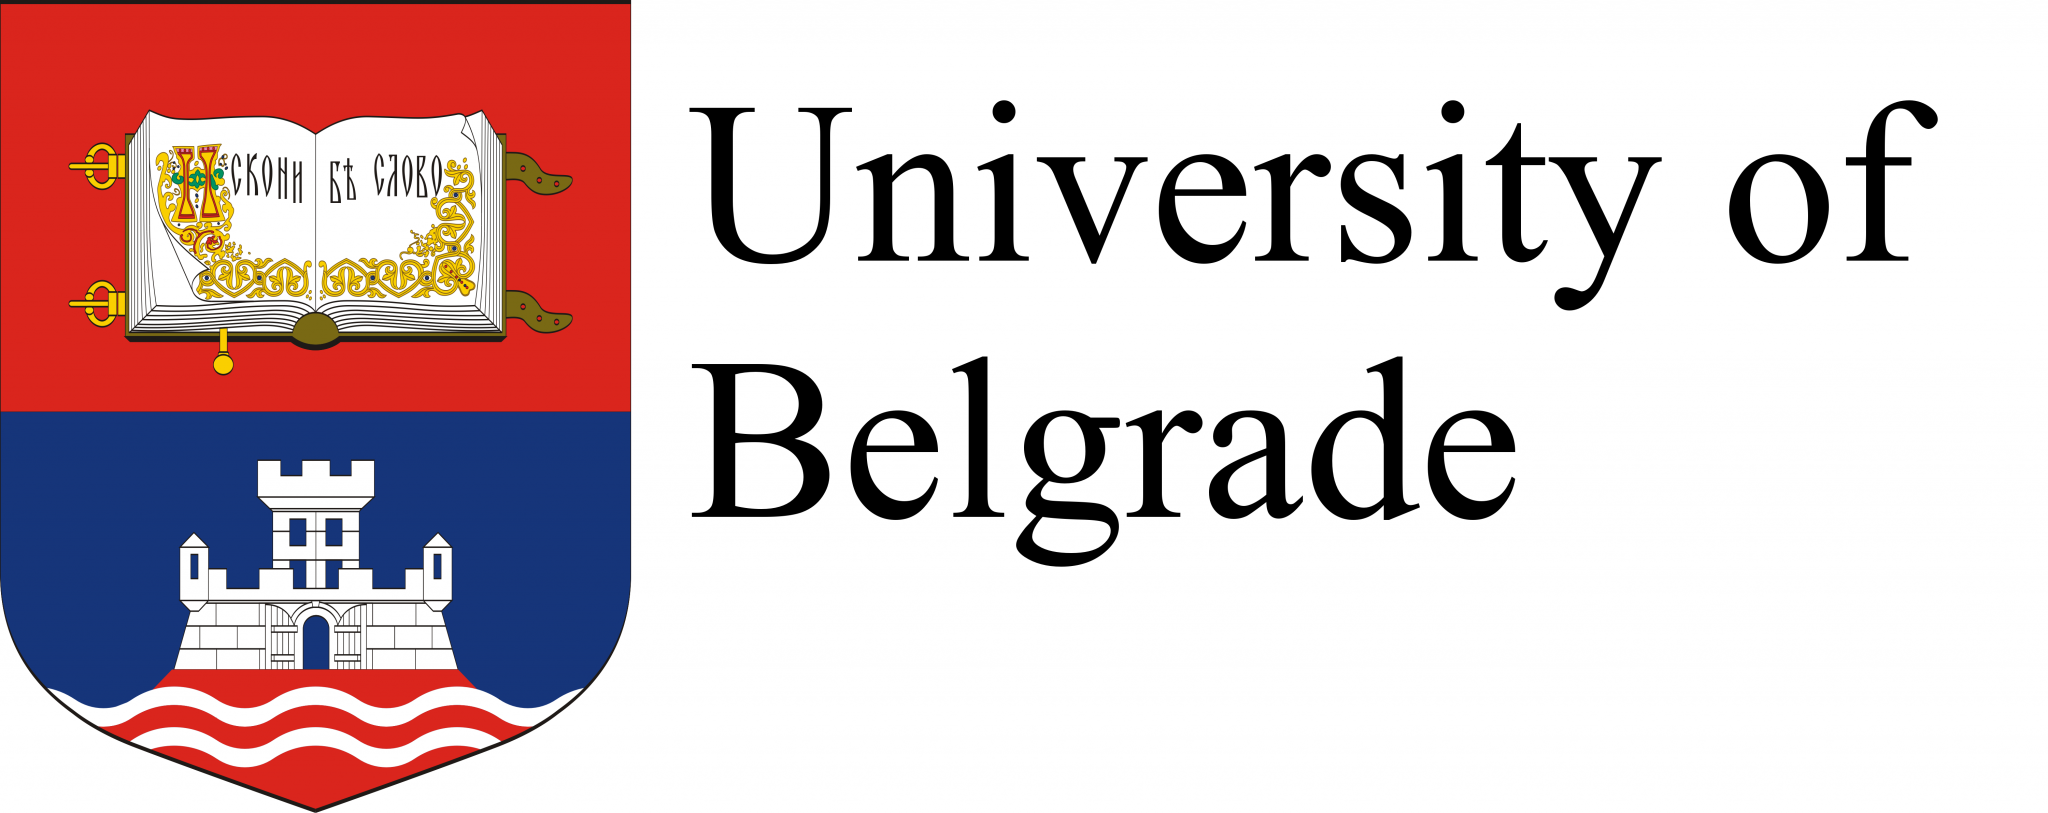 https://www.yizuo-media.com/photos/cpg/albums/userpics/10001/University_of_Belgrade.png